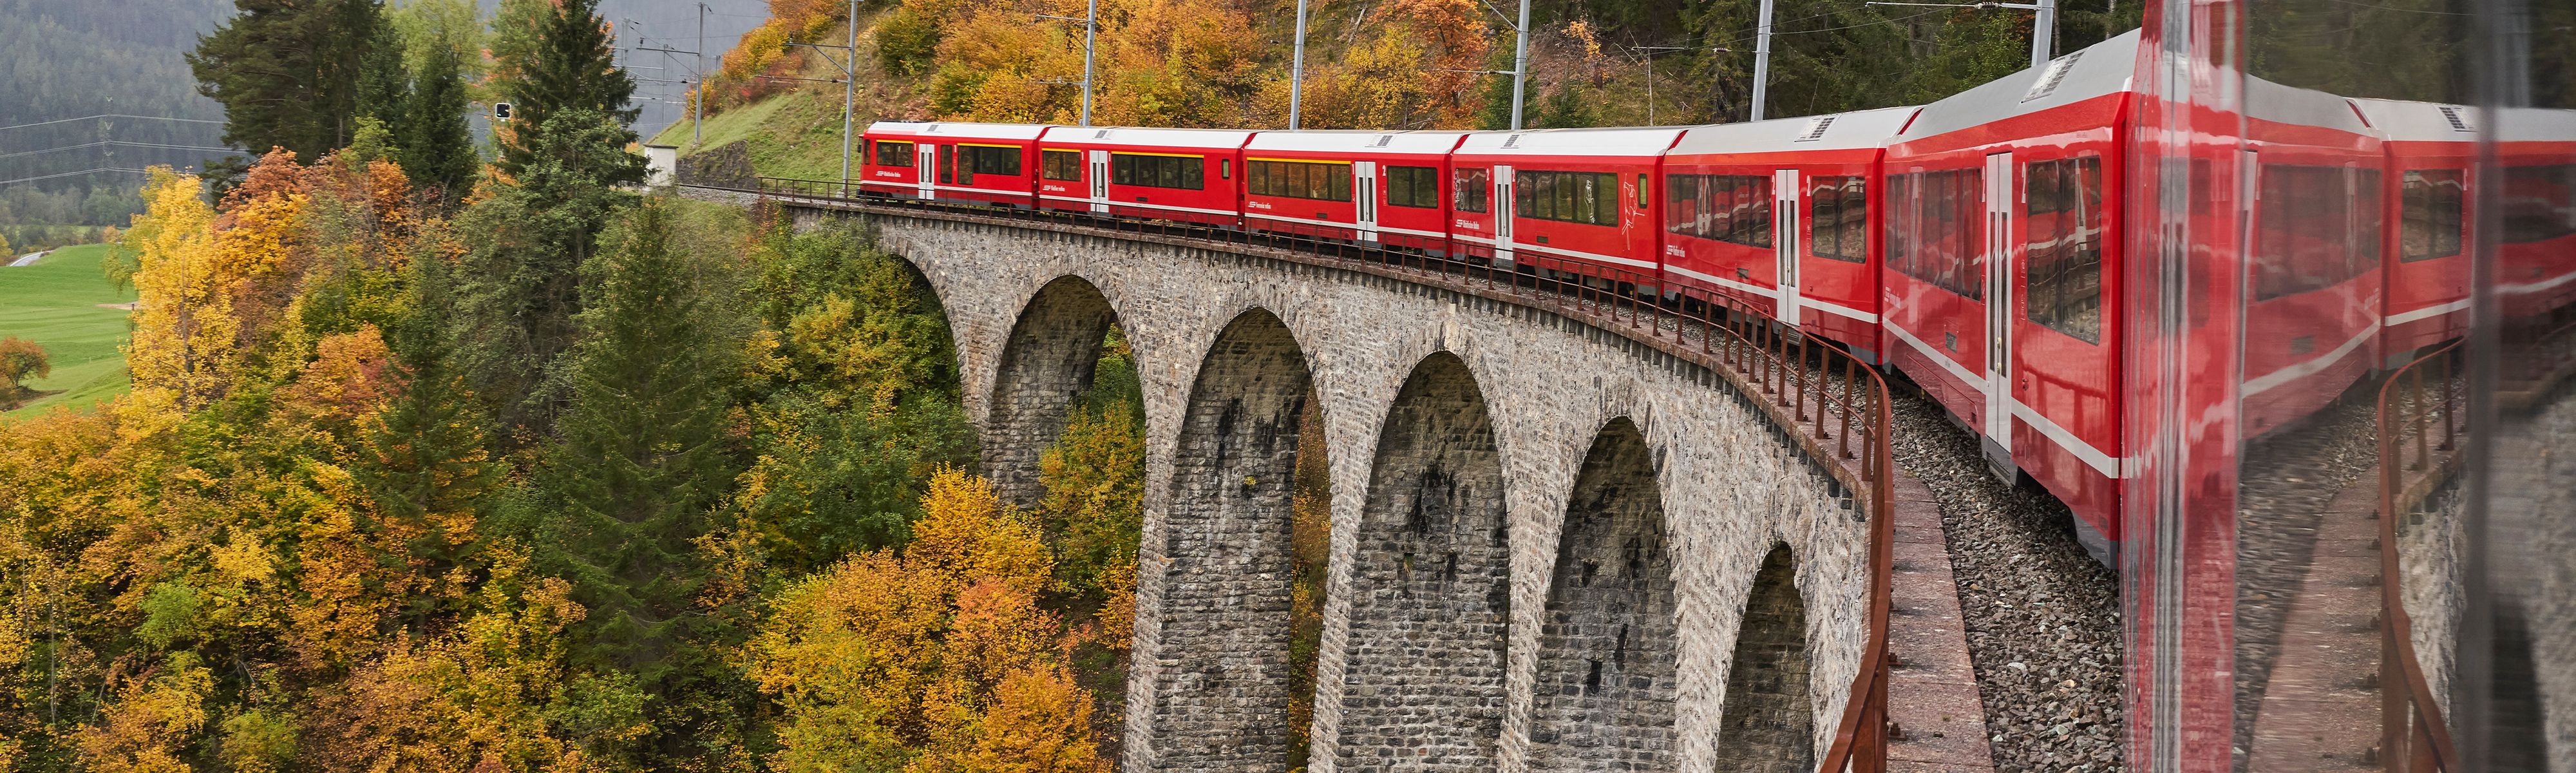 bright red train riding over a bridge in Switzerland